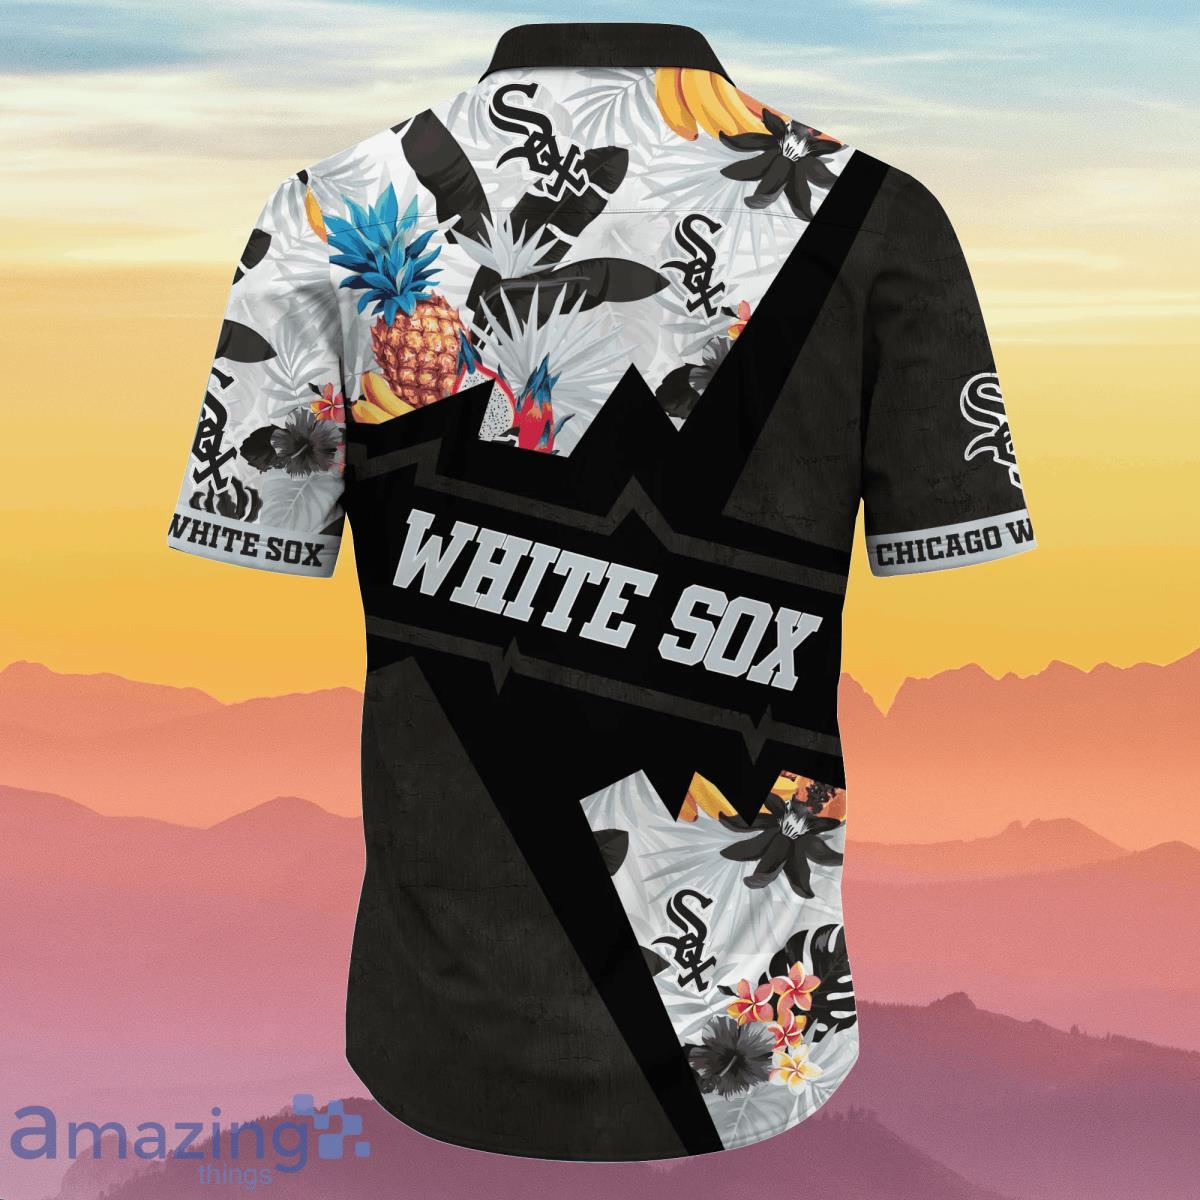 Chicago White Sox Orange MLB Jerseys for sale